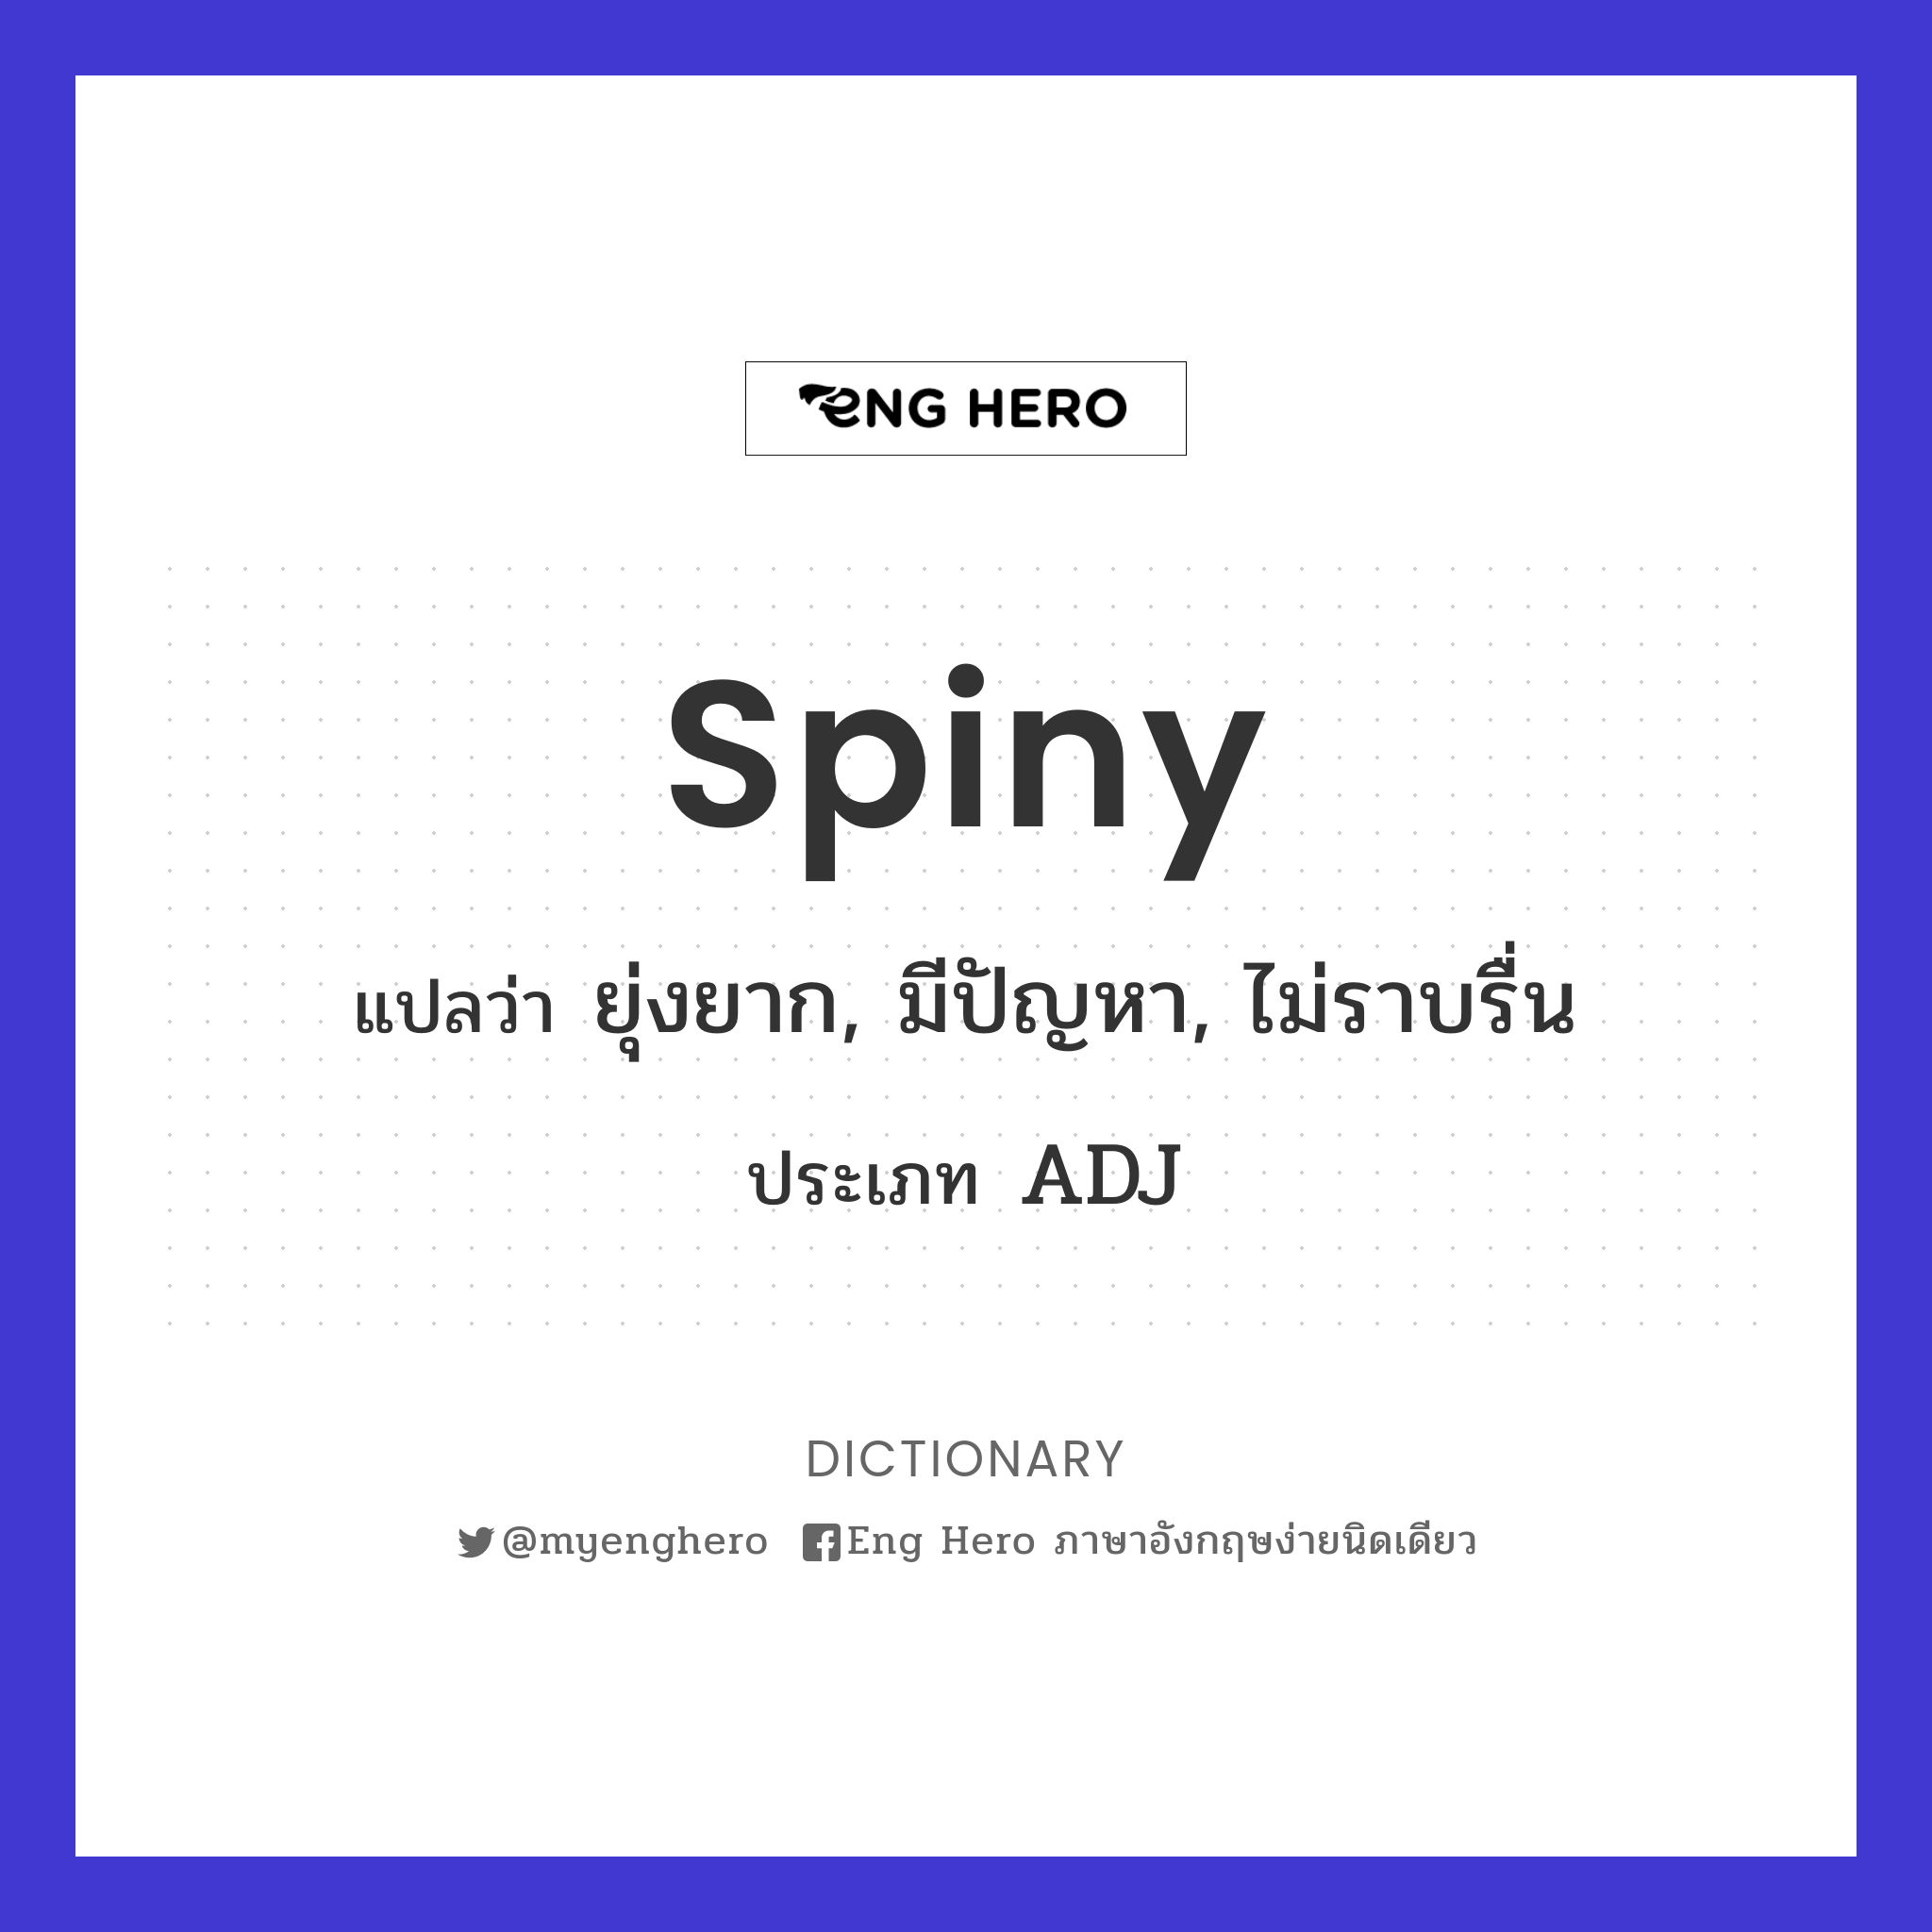 spiny